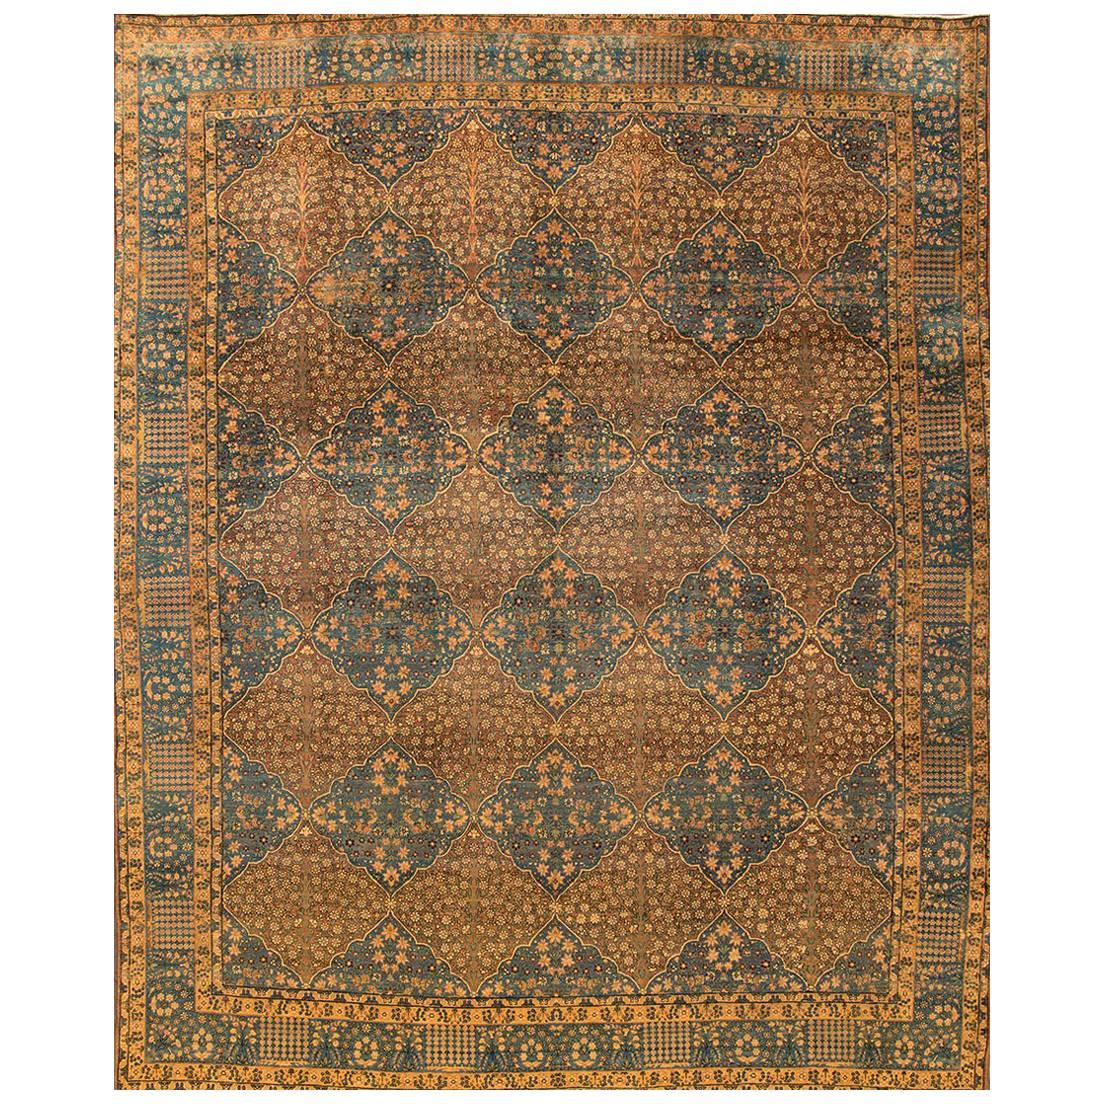 Antique Beige and Blue Persian Kerman Carpet